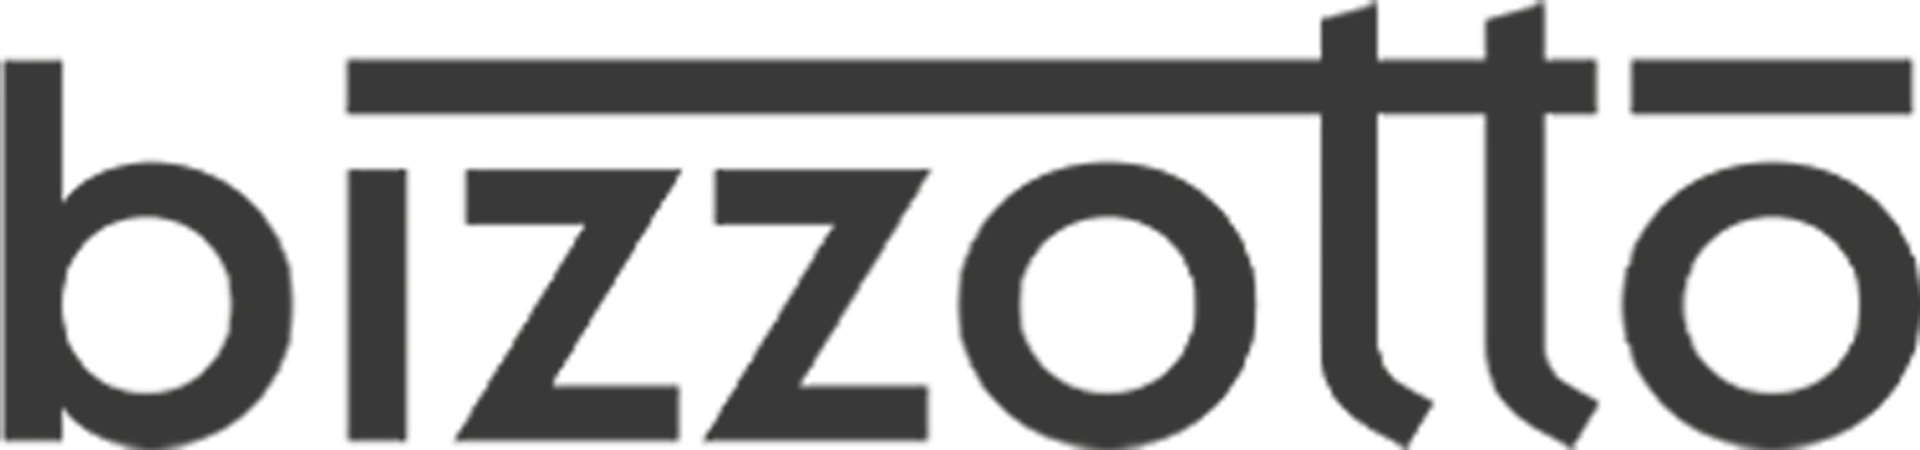 BIZZOTTO logo